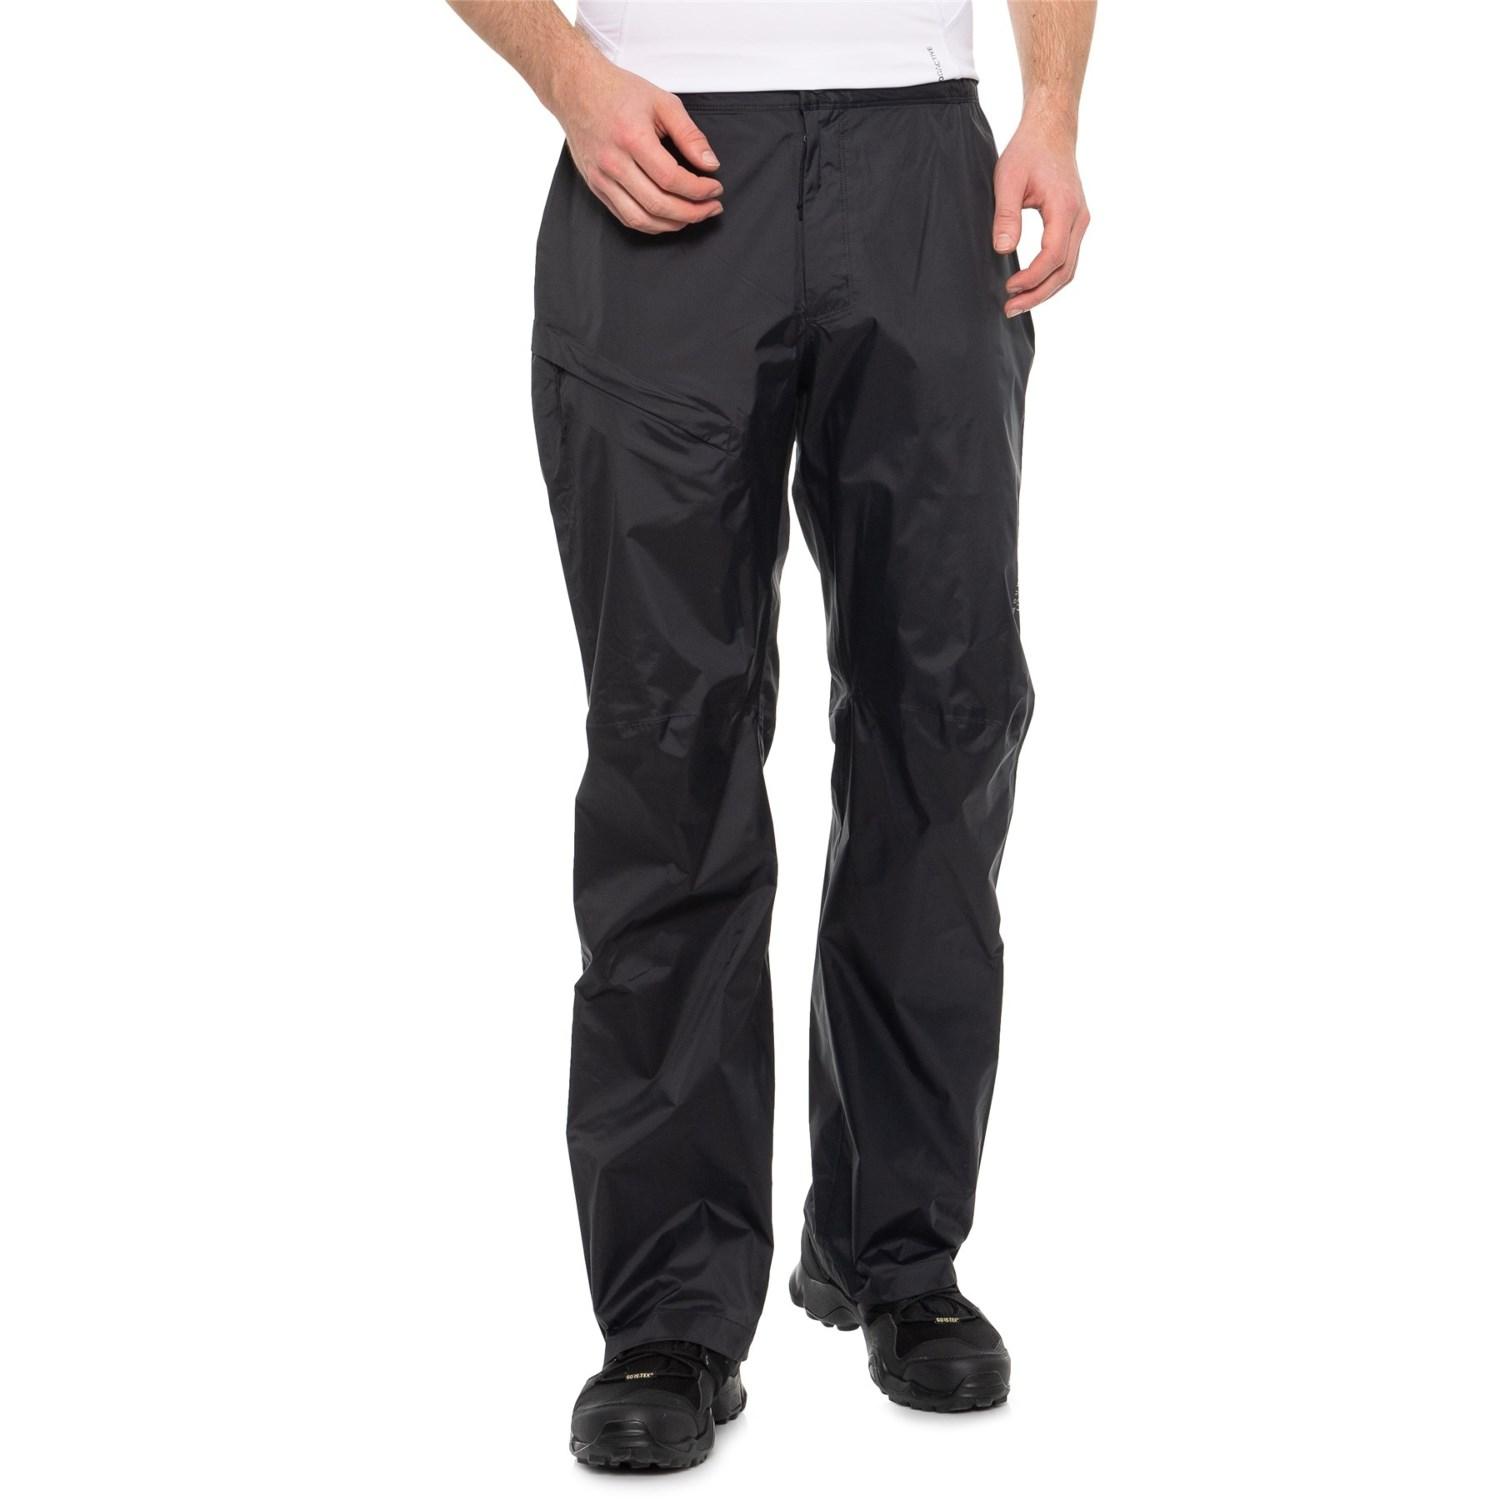 Mountain Hardwear Synthetic Black Exponent 2 Rain Pants for Men - Lyst